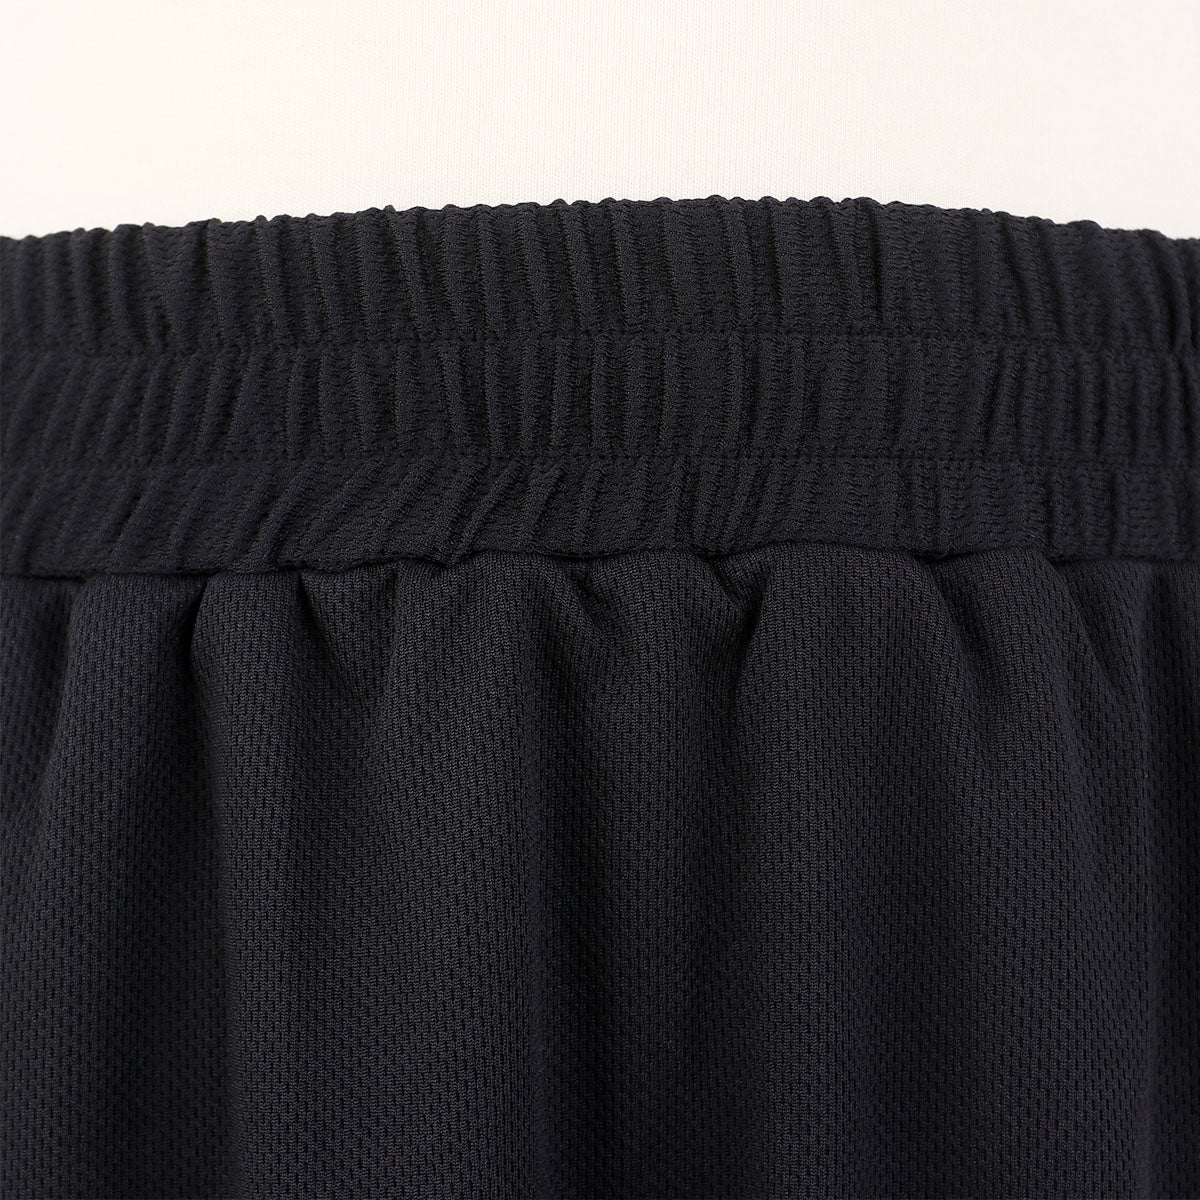 Zahiya Skirt - Black